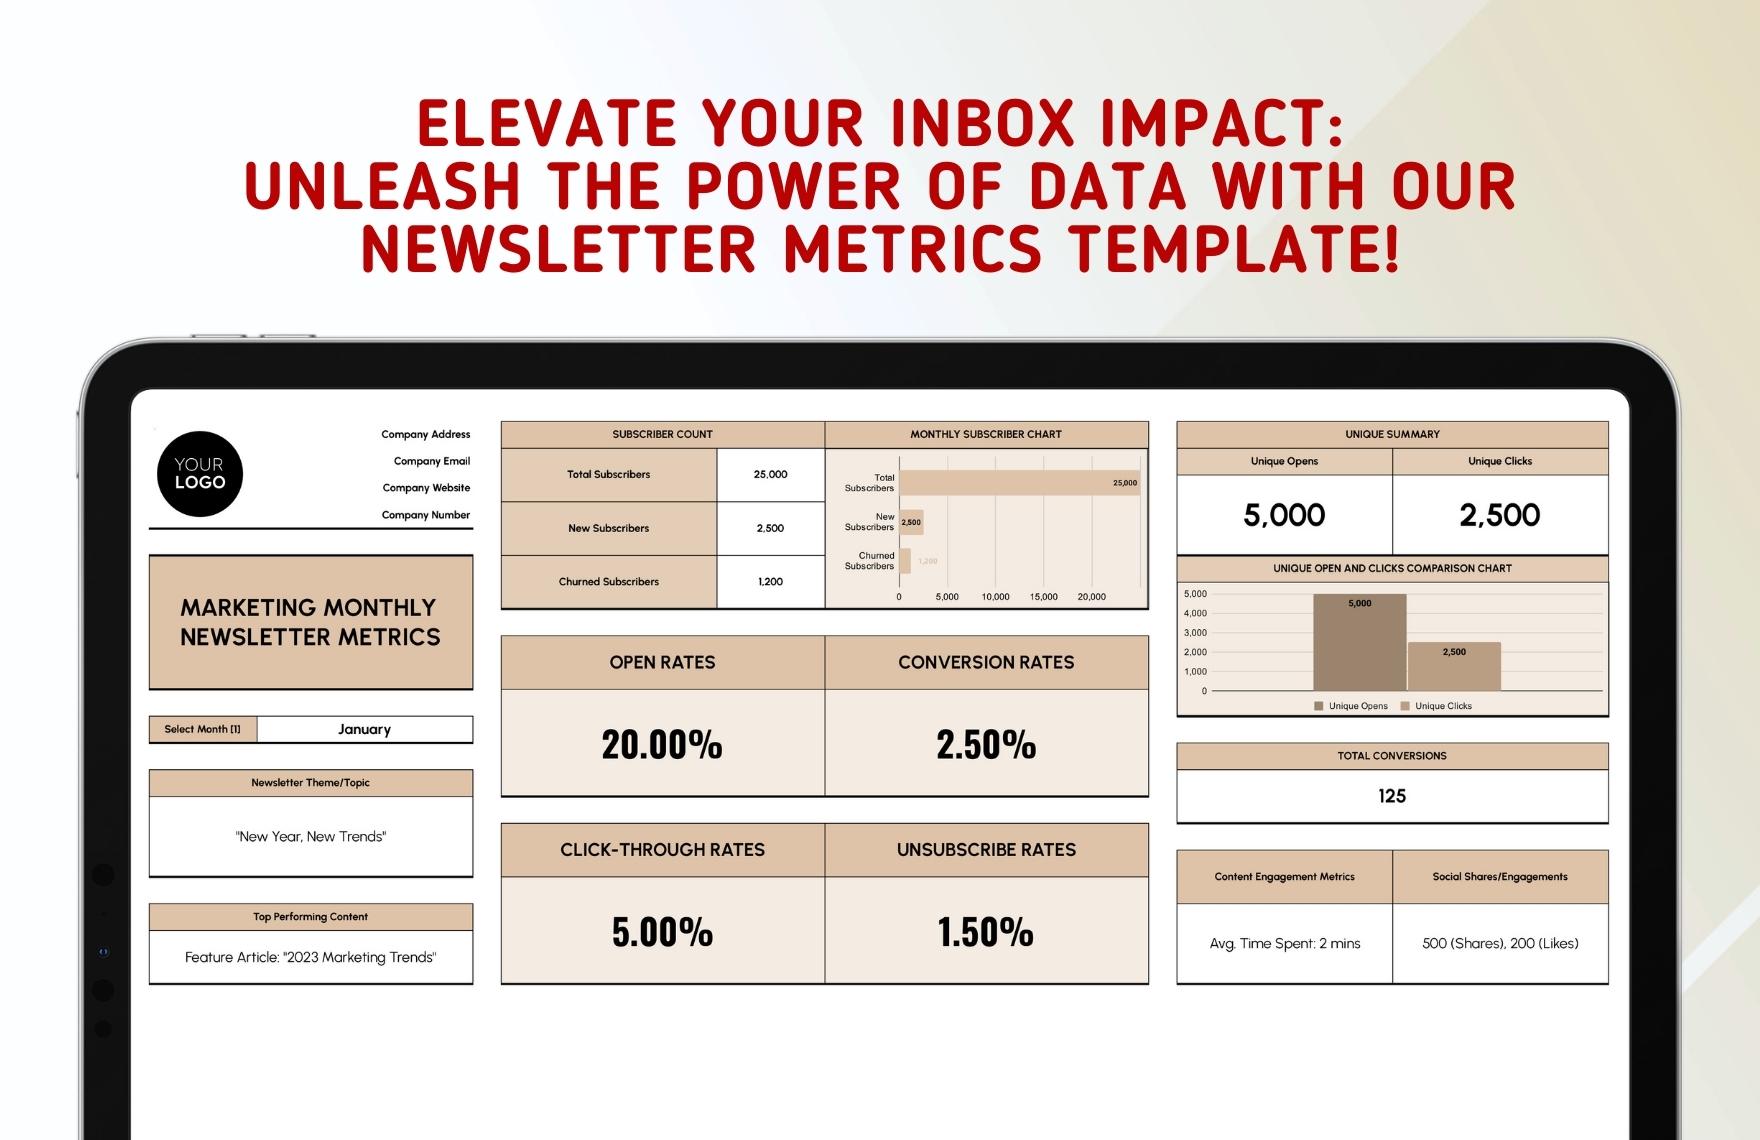 Marketing Monthly Newsletter Metrics Template